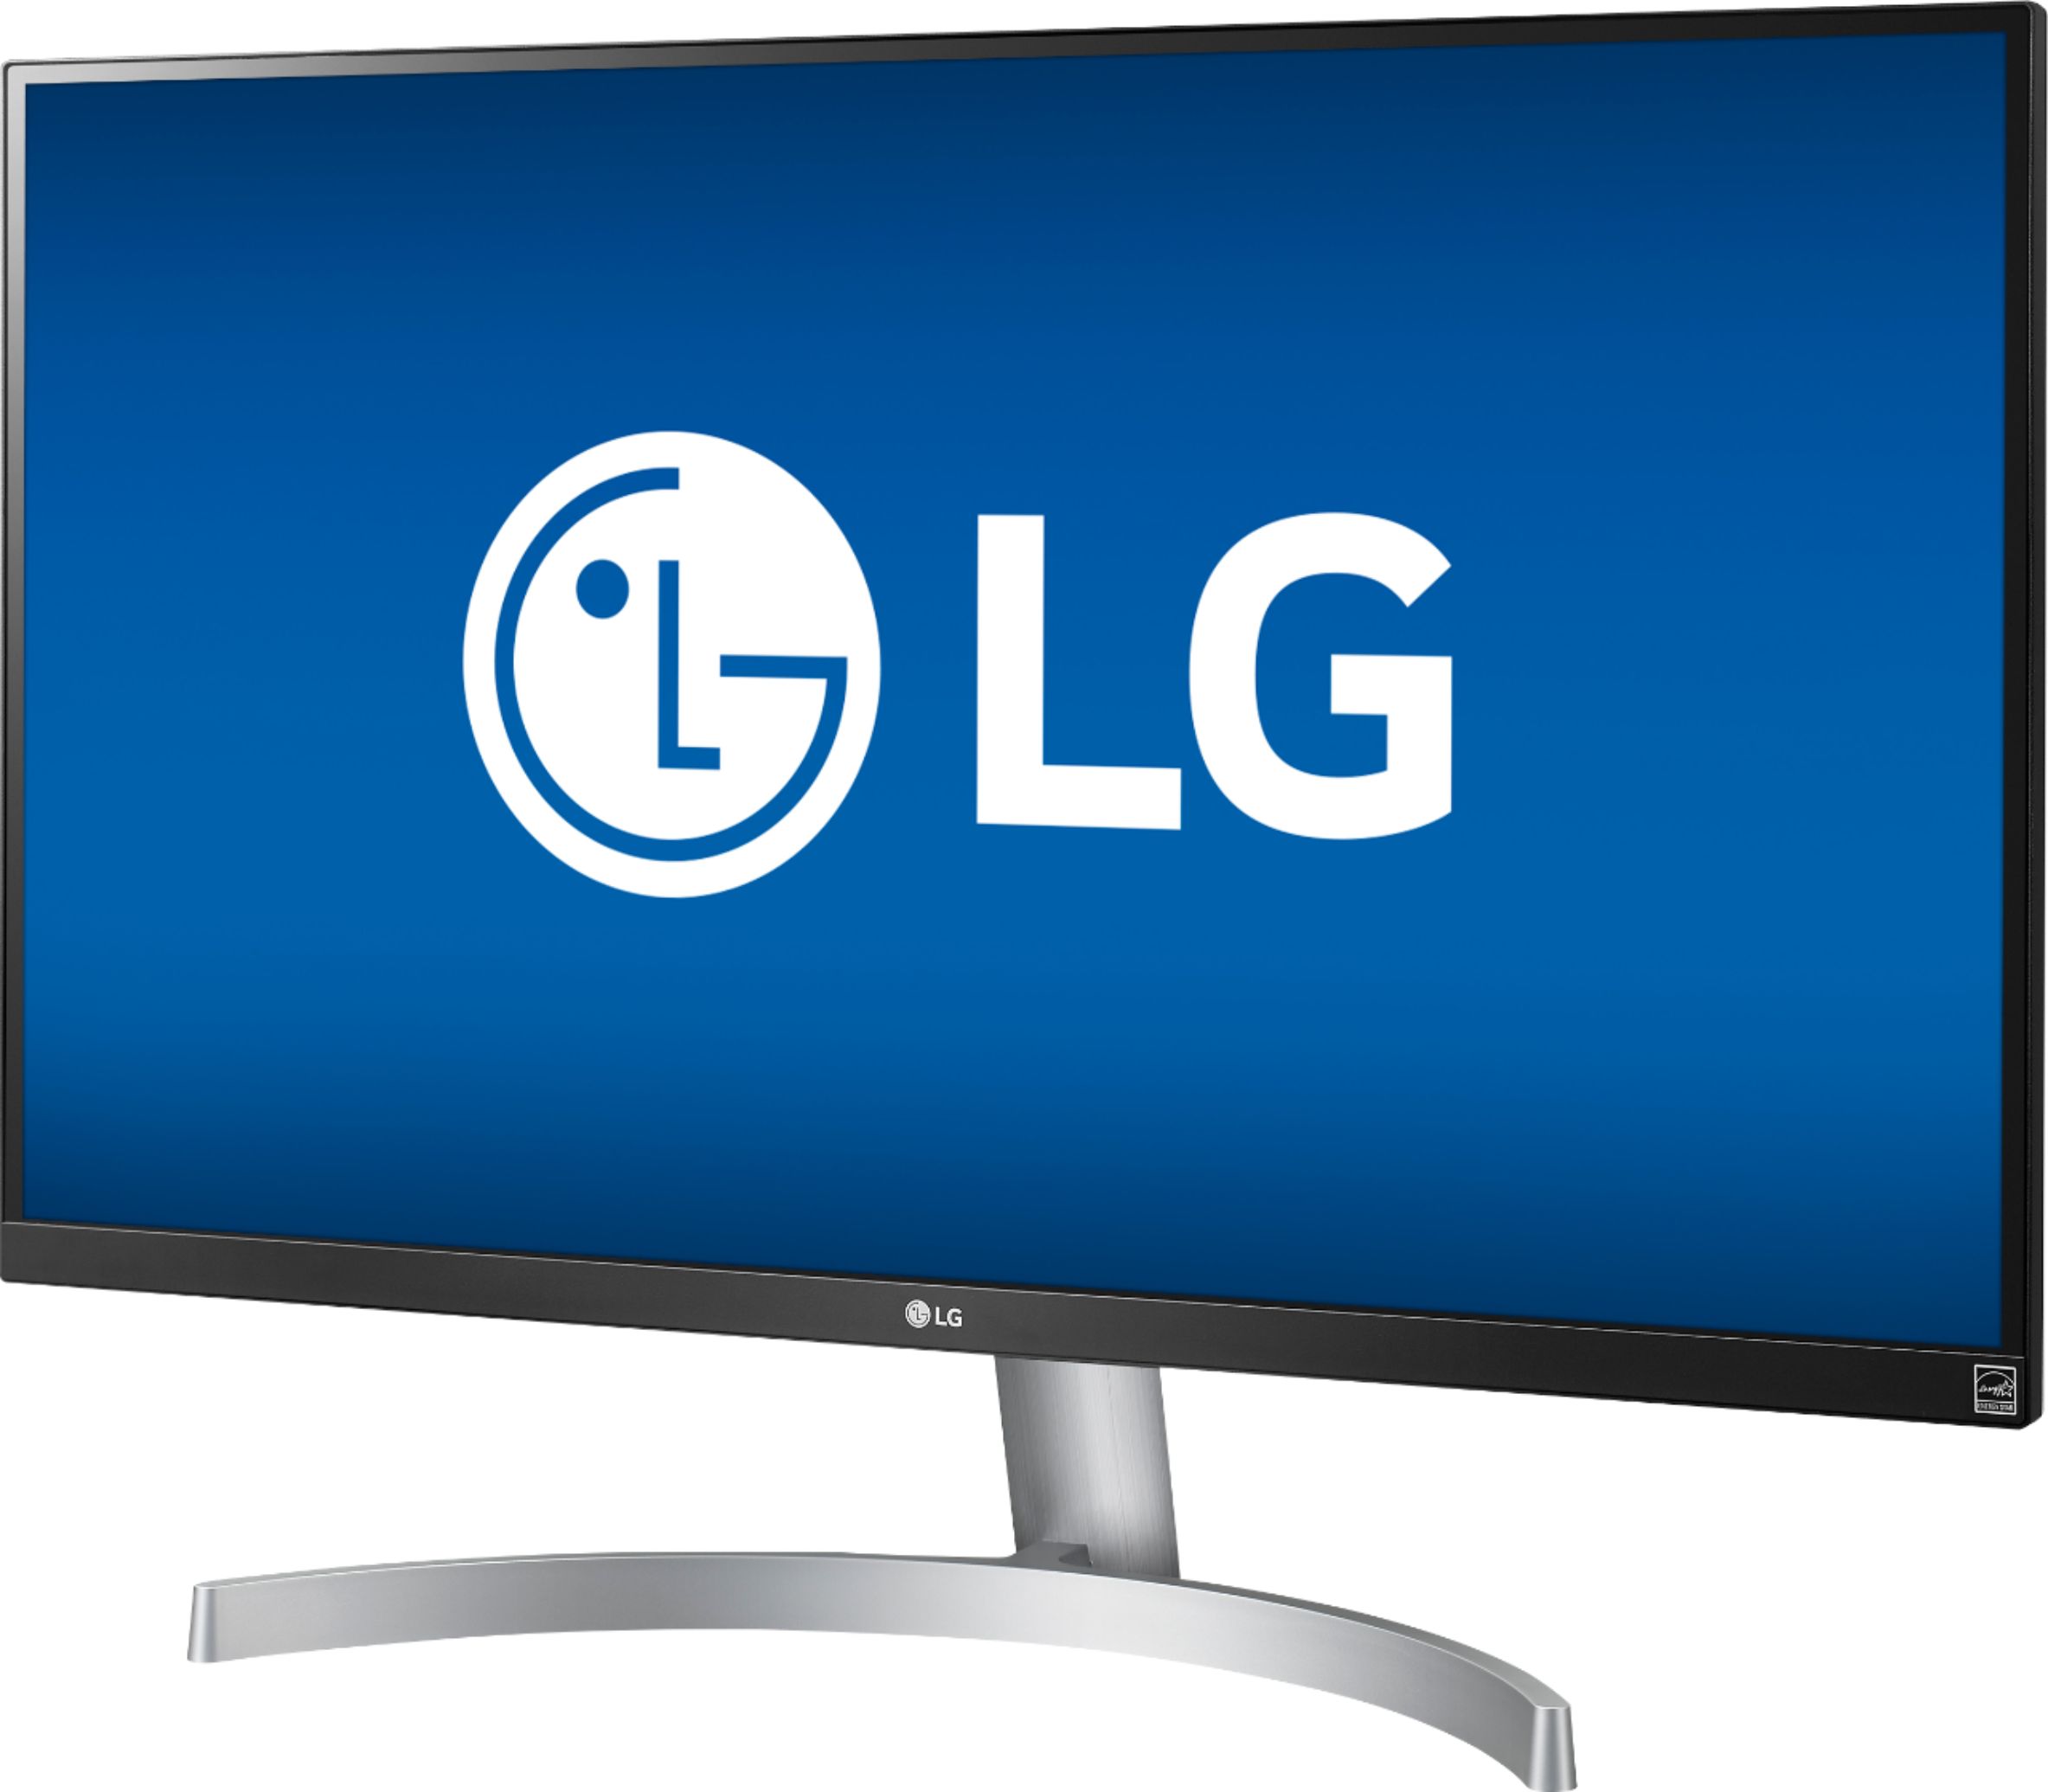 LG Monitor LED IPS UHD 4K Class 27'' con HDR 10 (27'' Diagonal